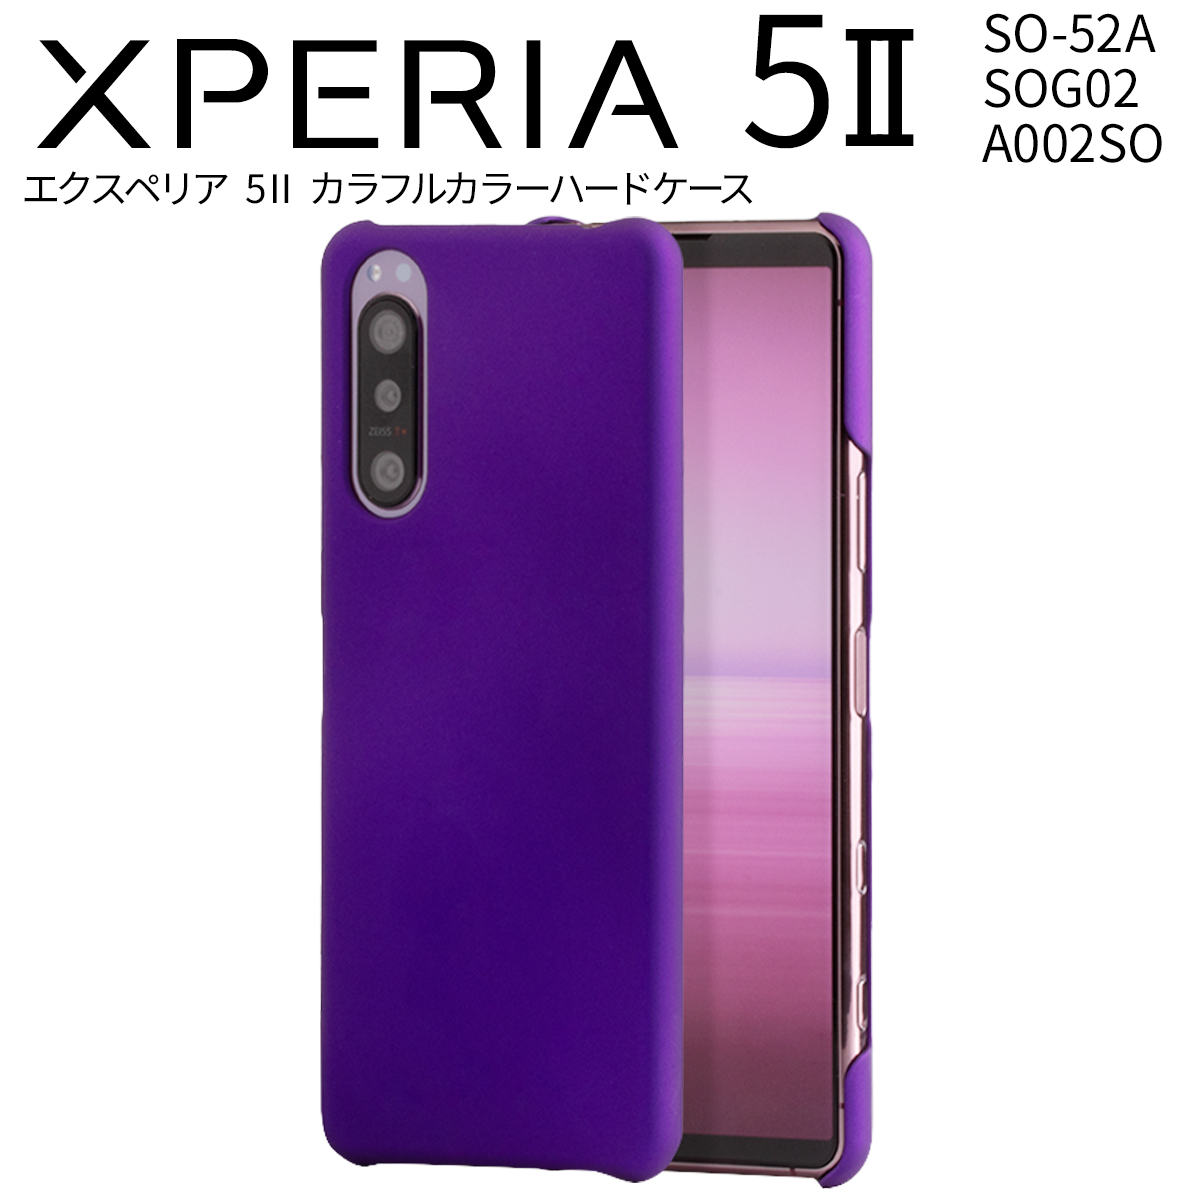 Xperia 5 II SOG02 A002SO カラフルカラーハードケース